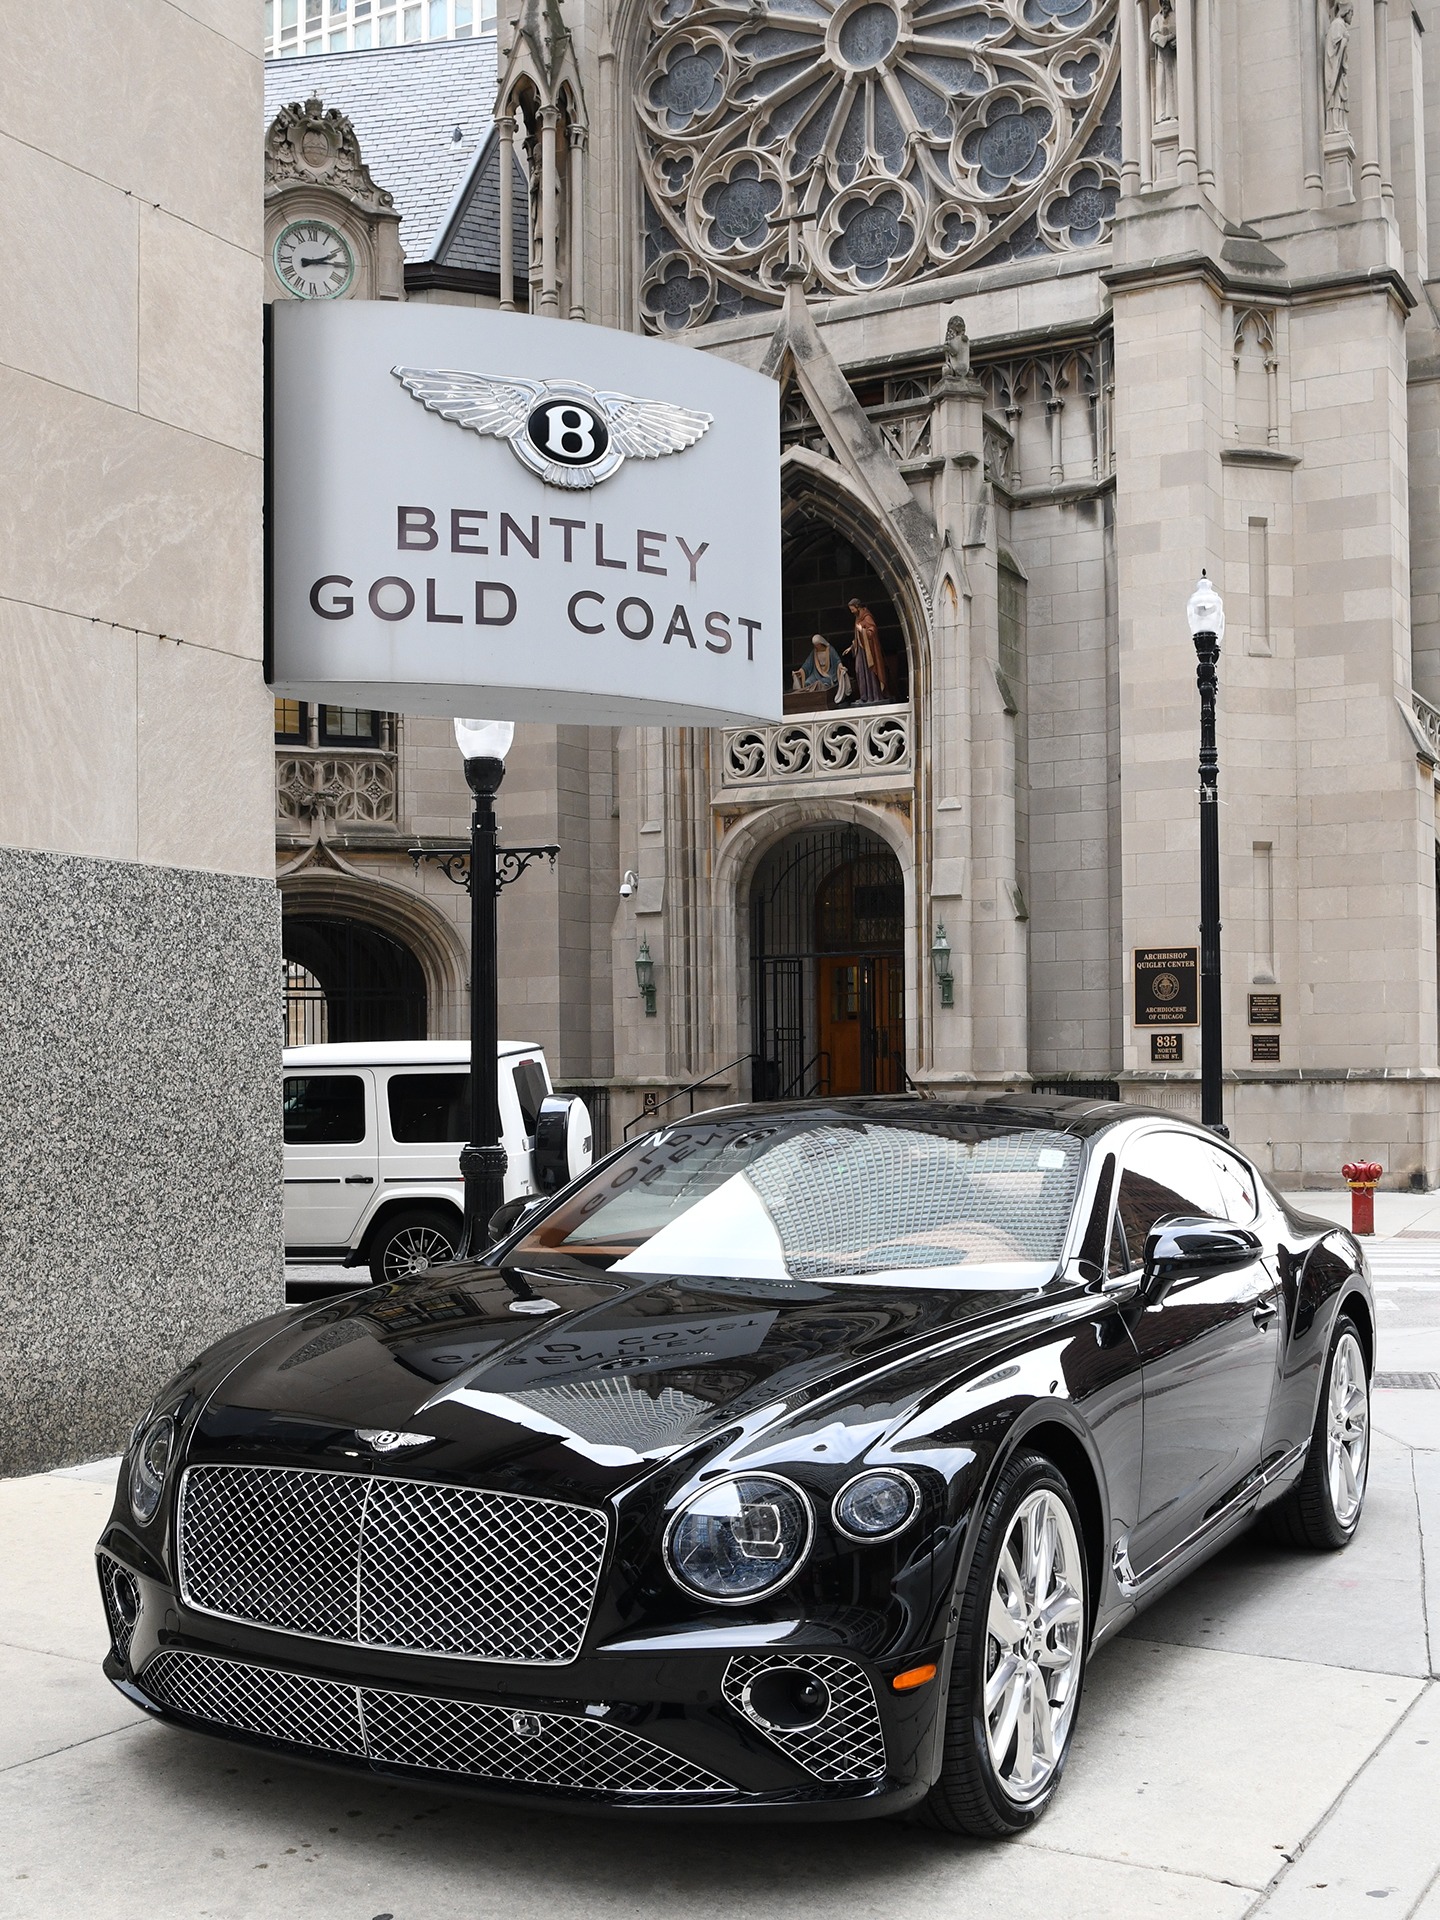 New 2021 Bentley Continental GT 1608672035 